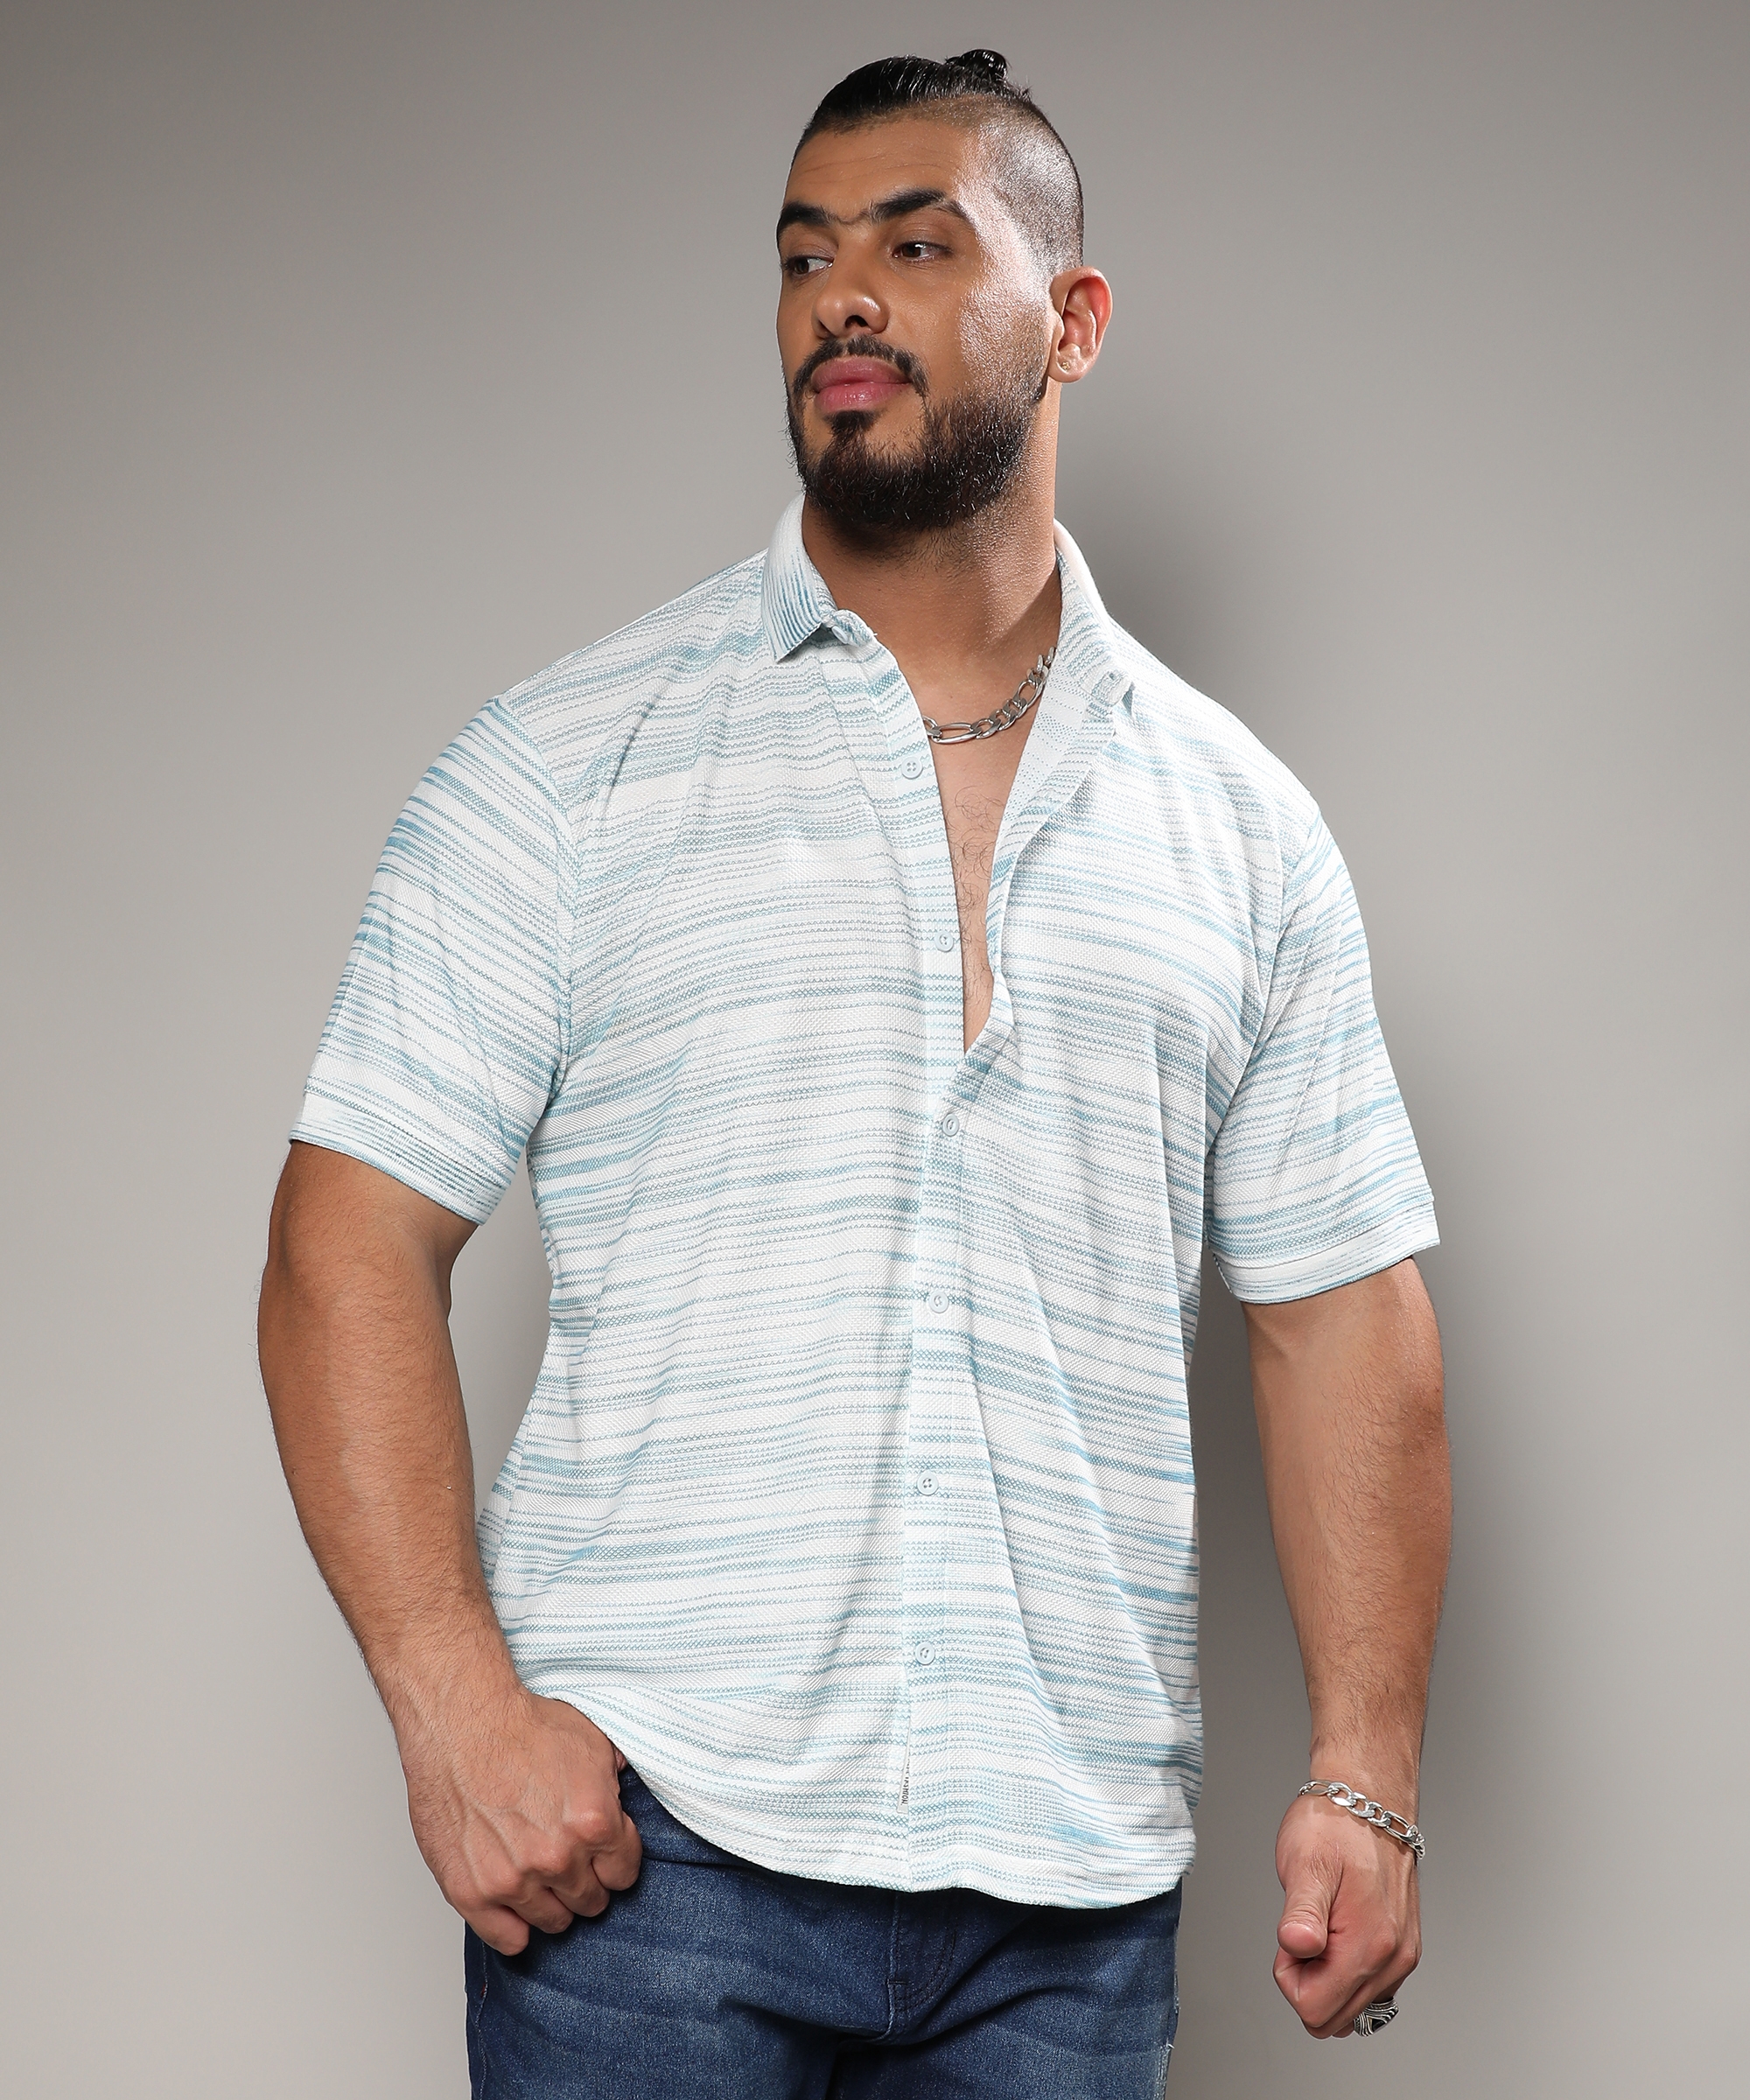 Men's Light Blue & White Textured Horizontal Striped Shirt